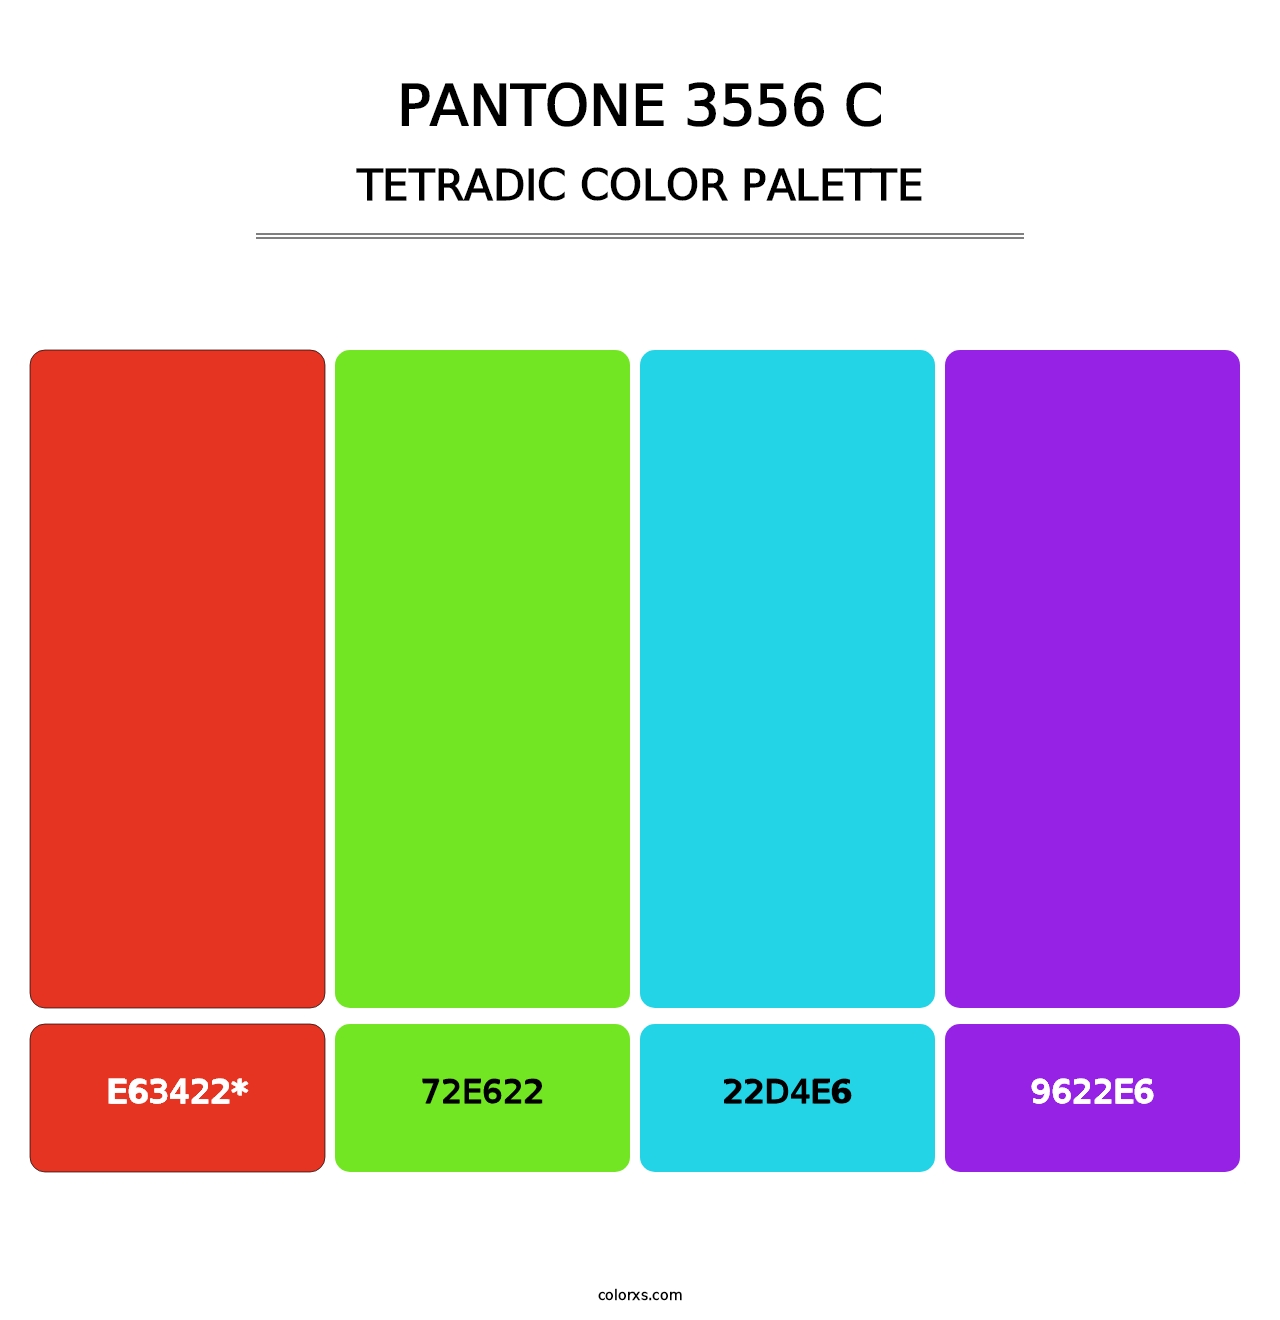 PANTONE 3556 C - Tetradic Color Palette